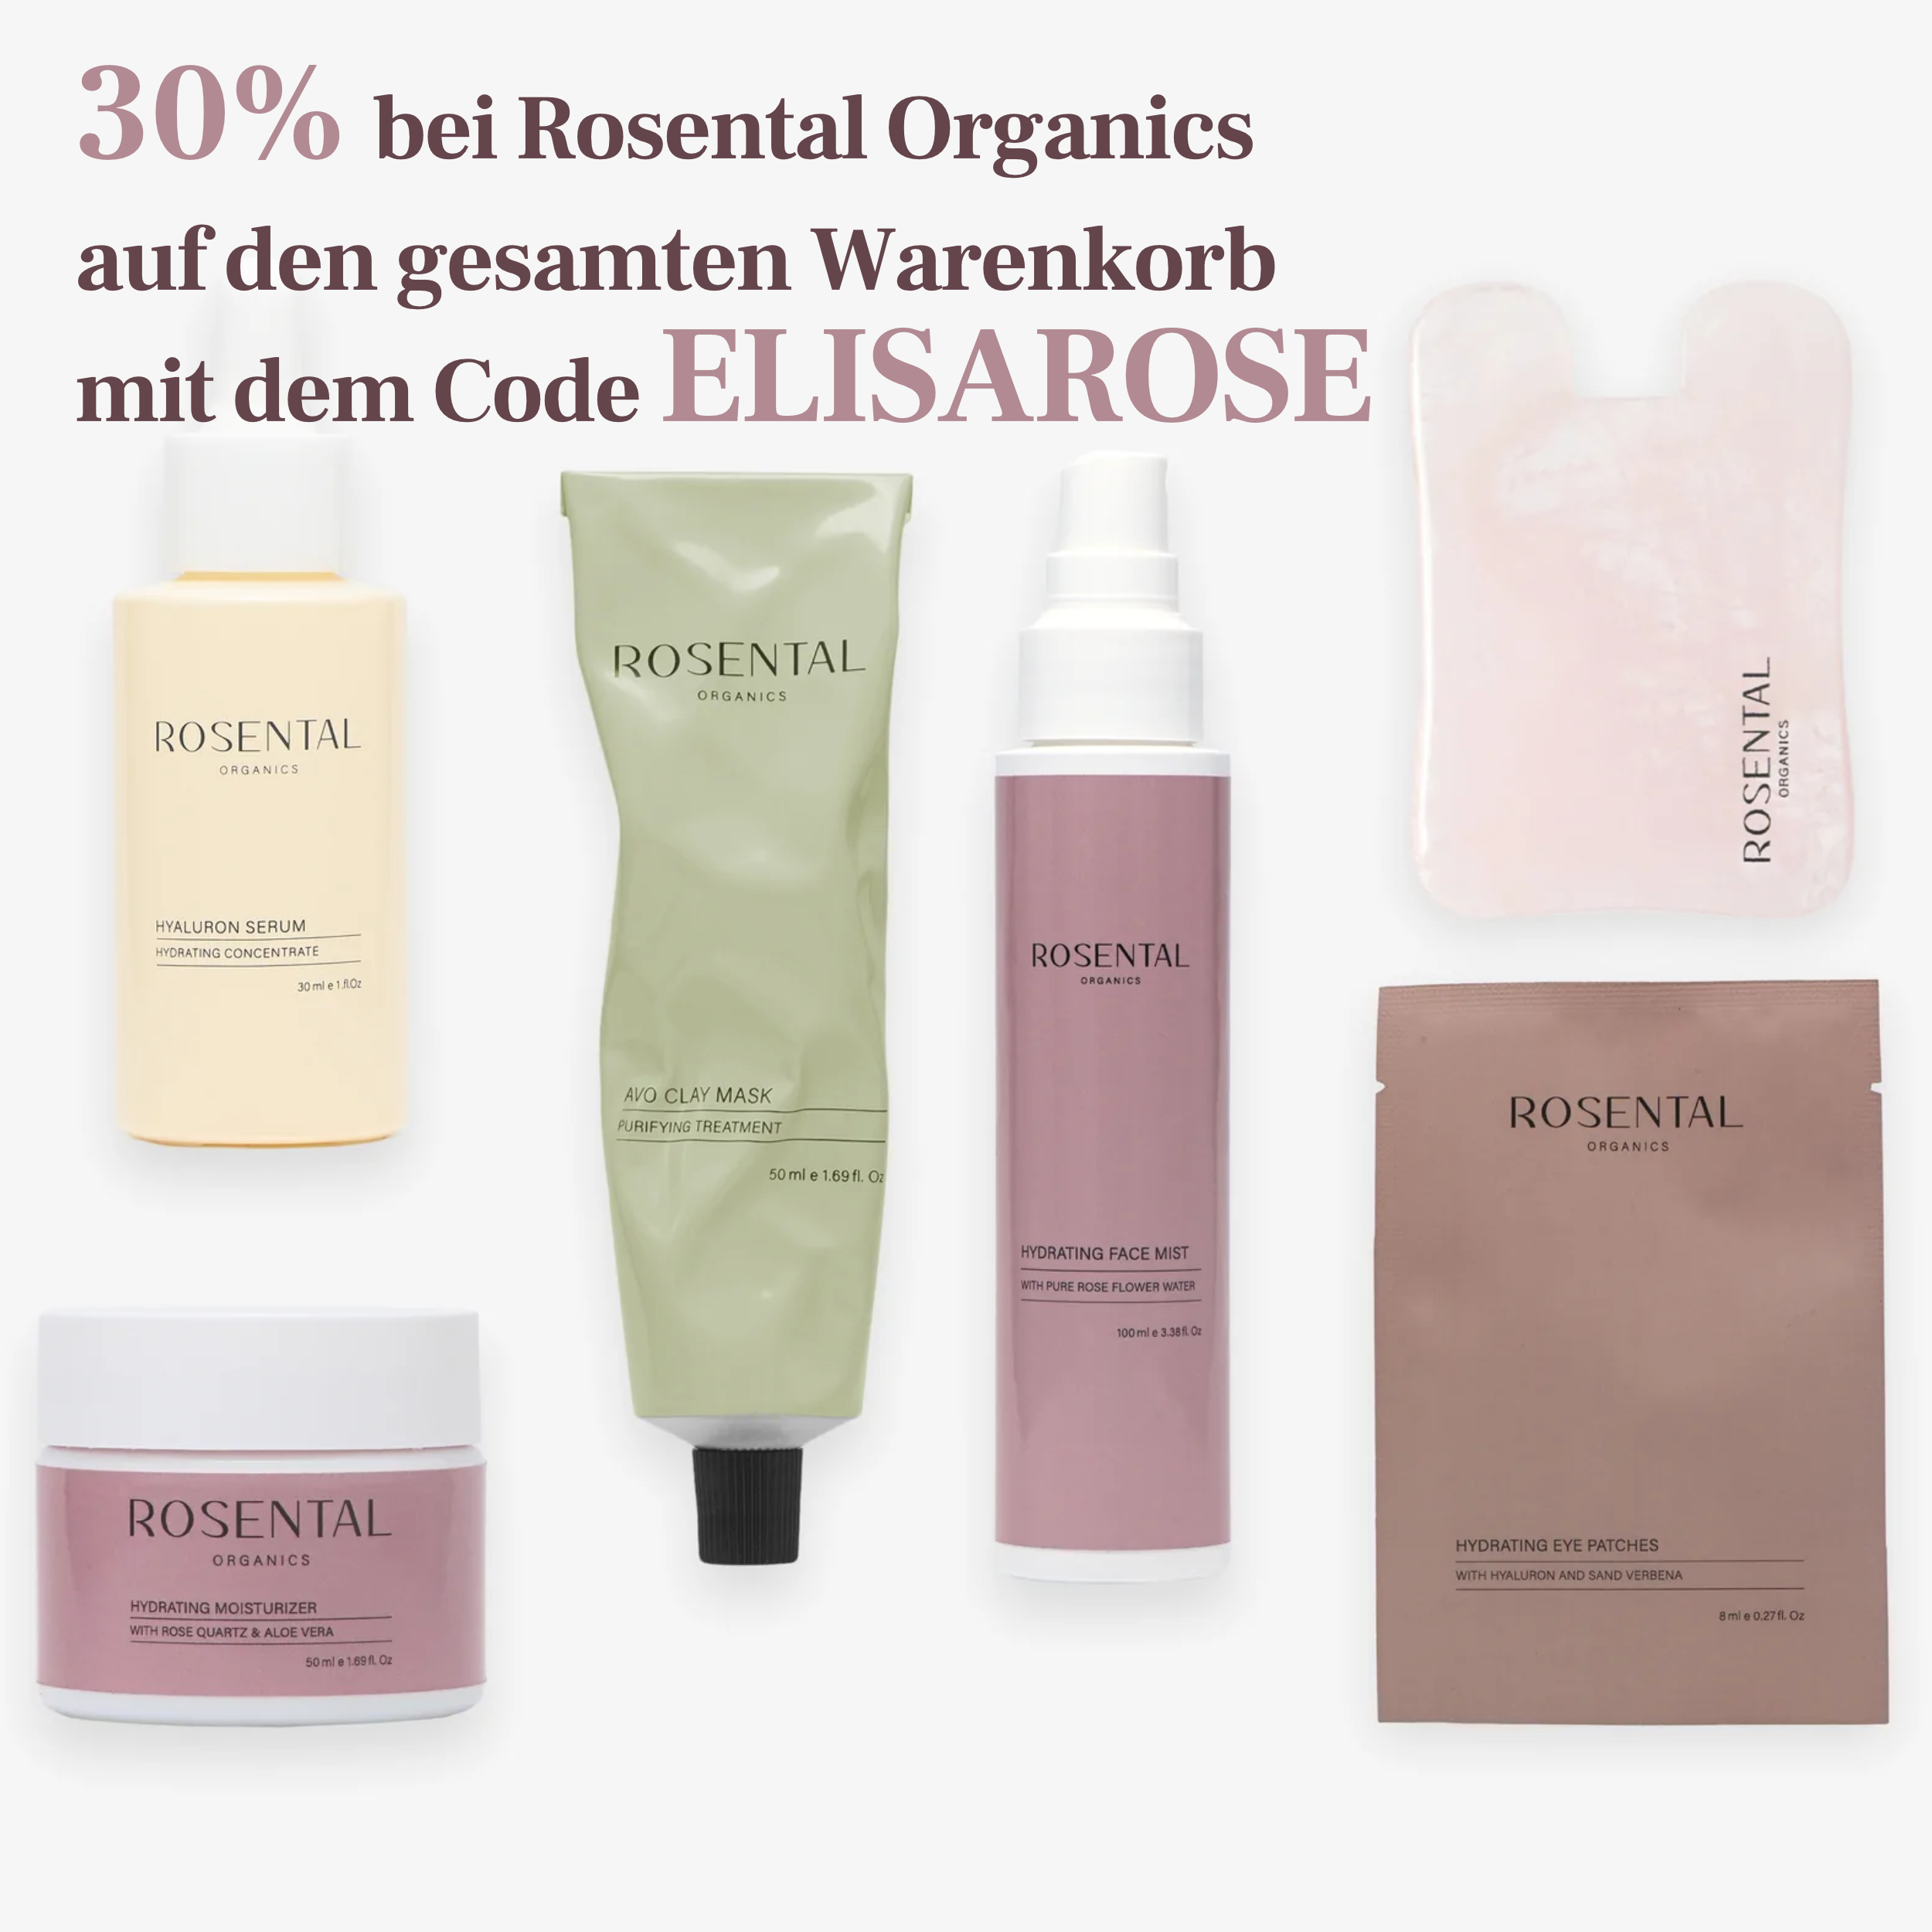 Rosental Organics Rabatt mit 30% auf den gesamten Warenkrb